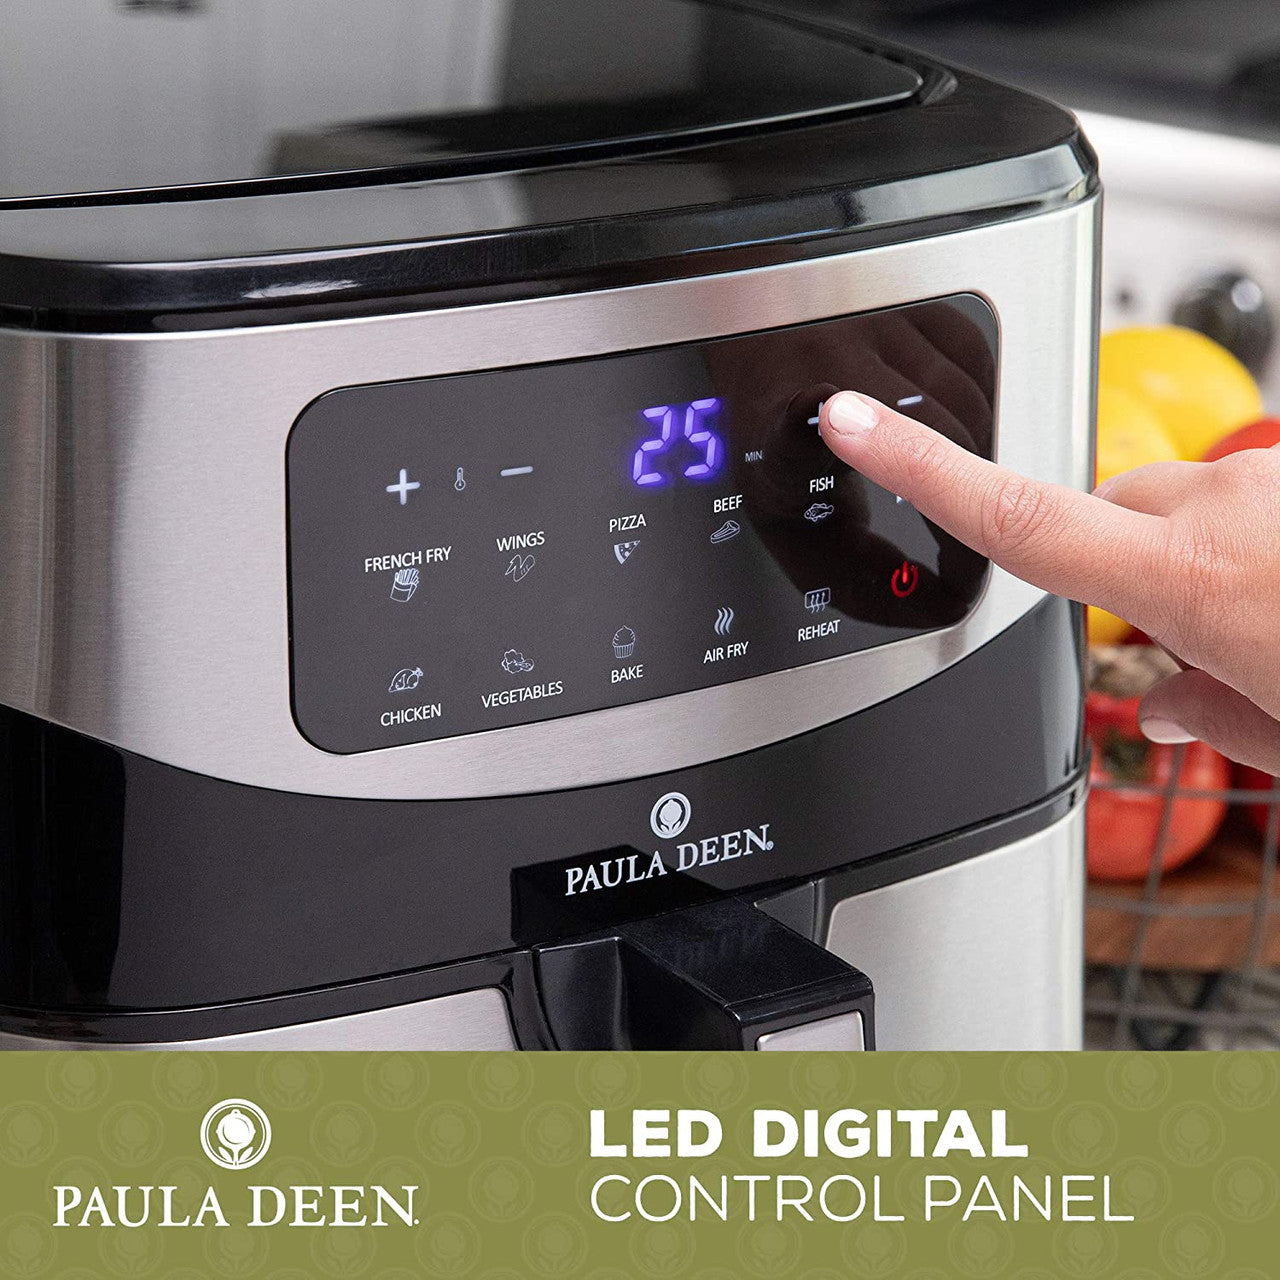 Paula Deen PDKDF579SS Stainless Steel 10 QT 1700 Watts Digital LED Display Air Fryer Silver - Certified Refurbished